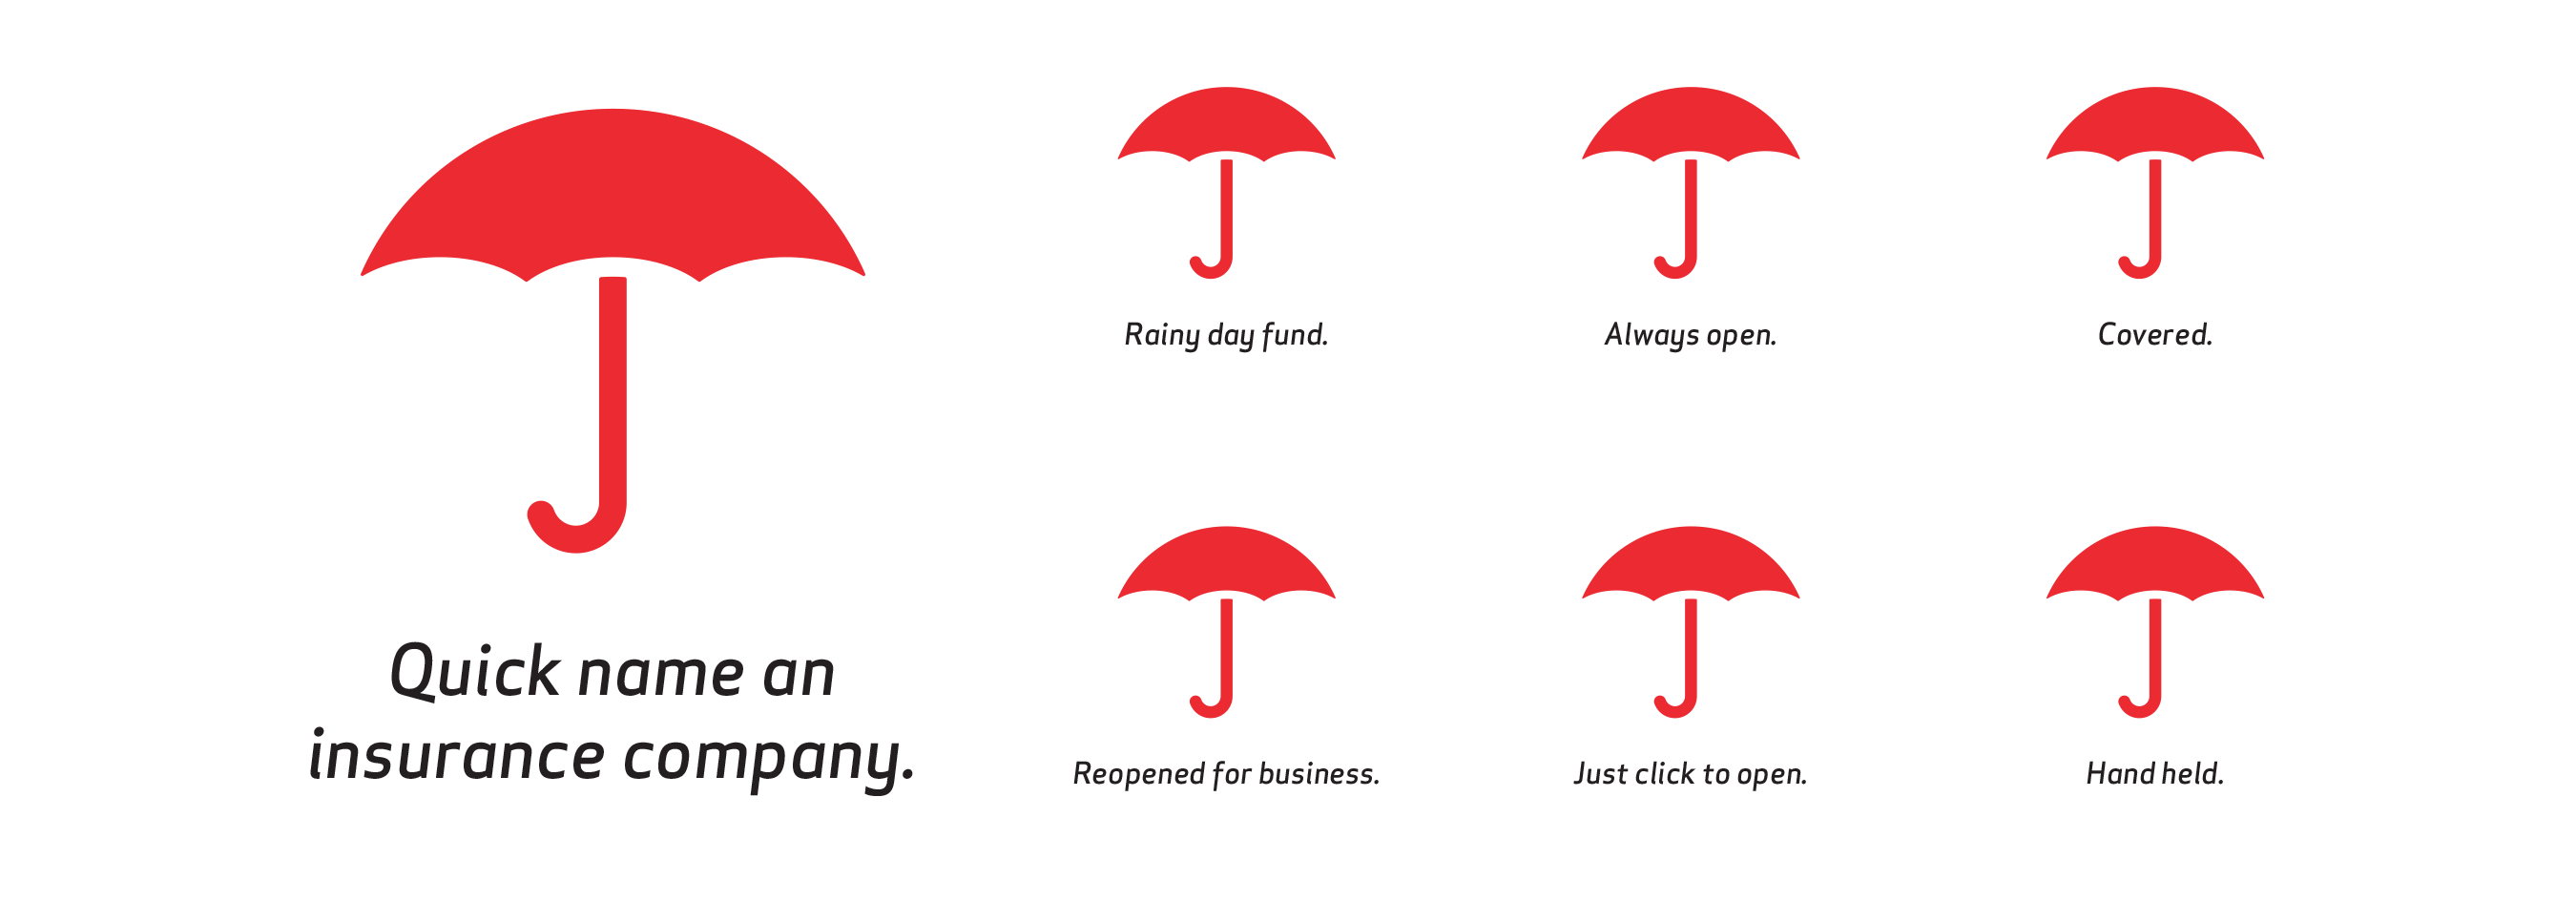 Red Umbrella Logo - Travelers Insurance